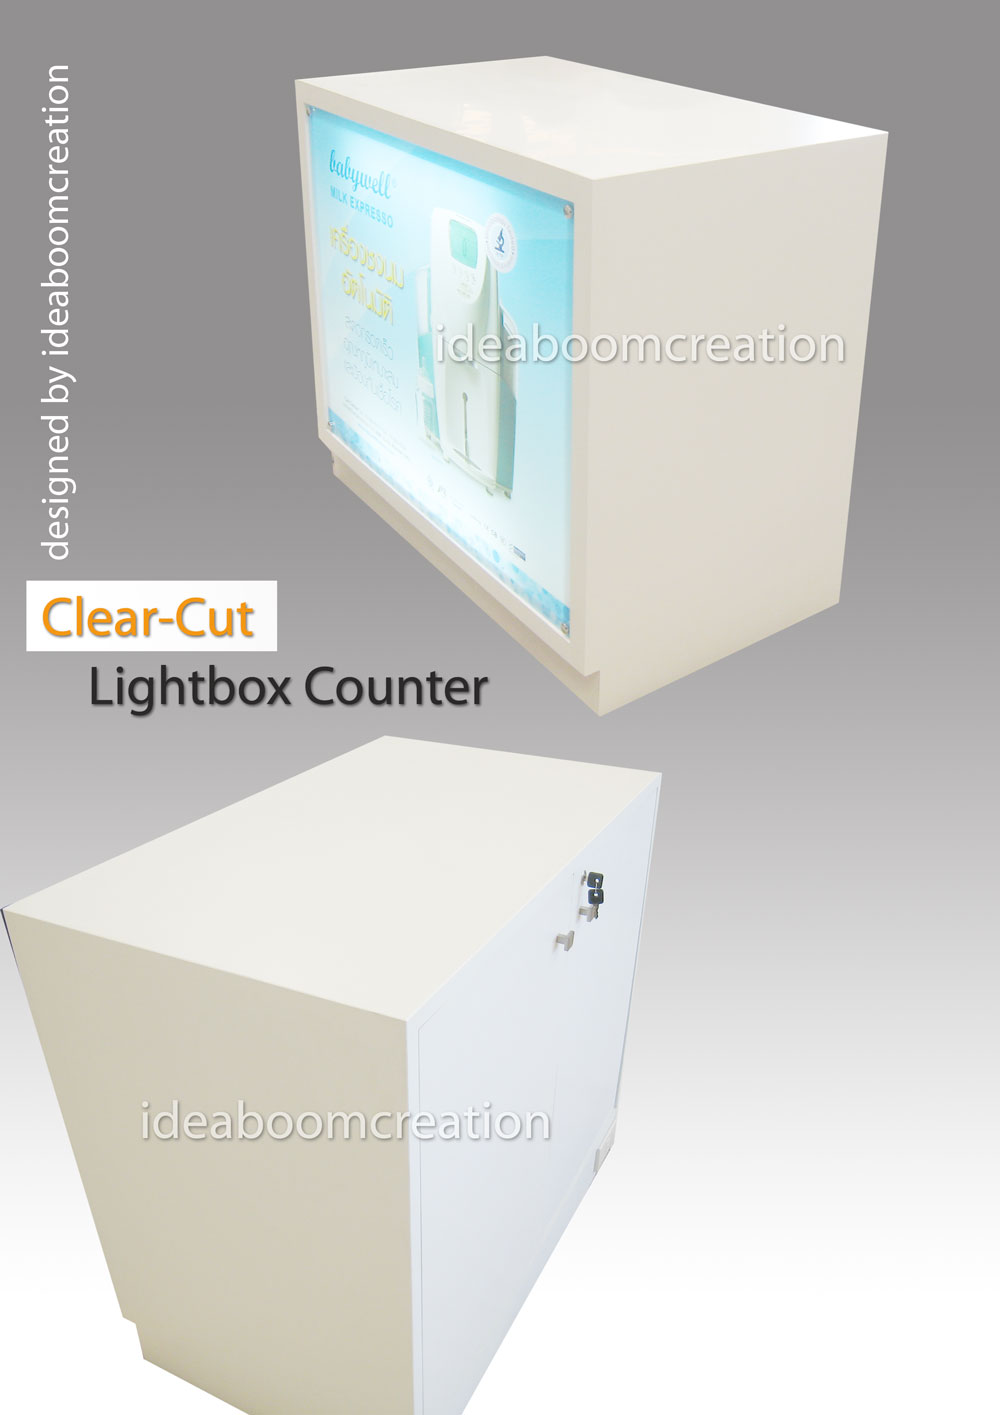 CLEAR-CUT Lightbox Counter